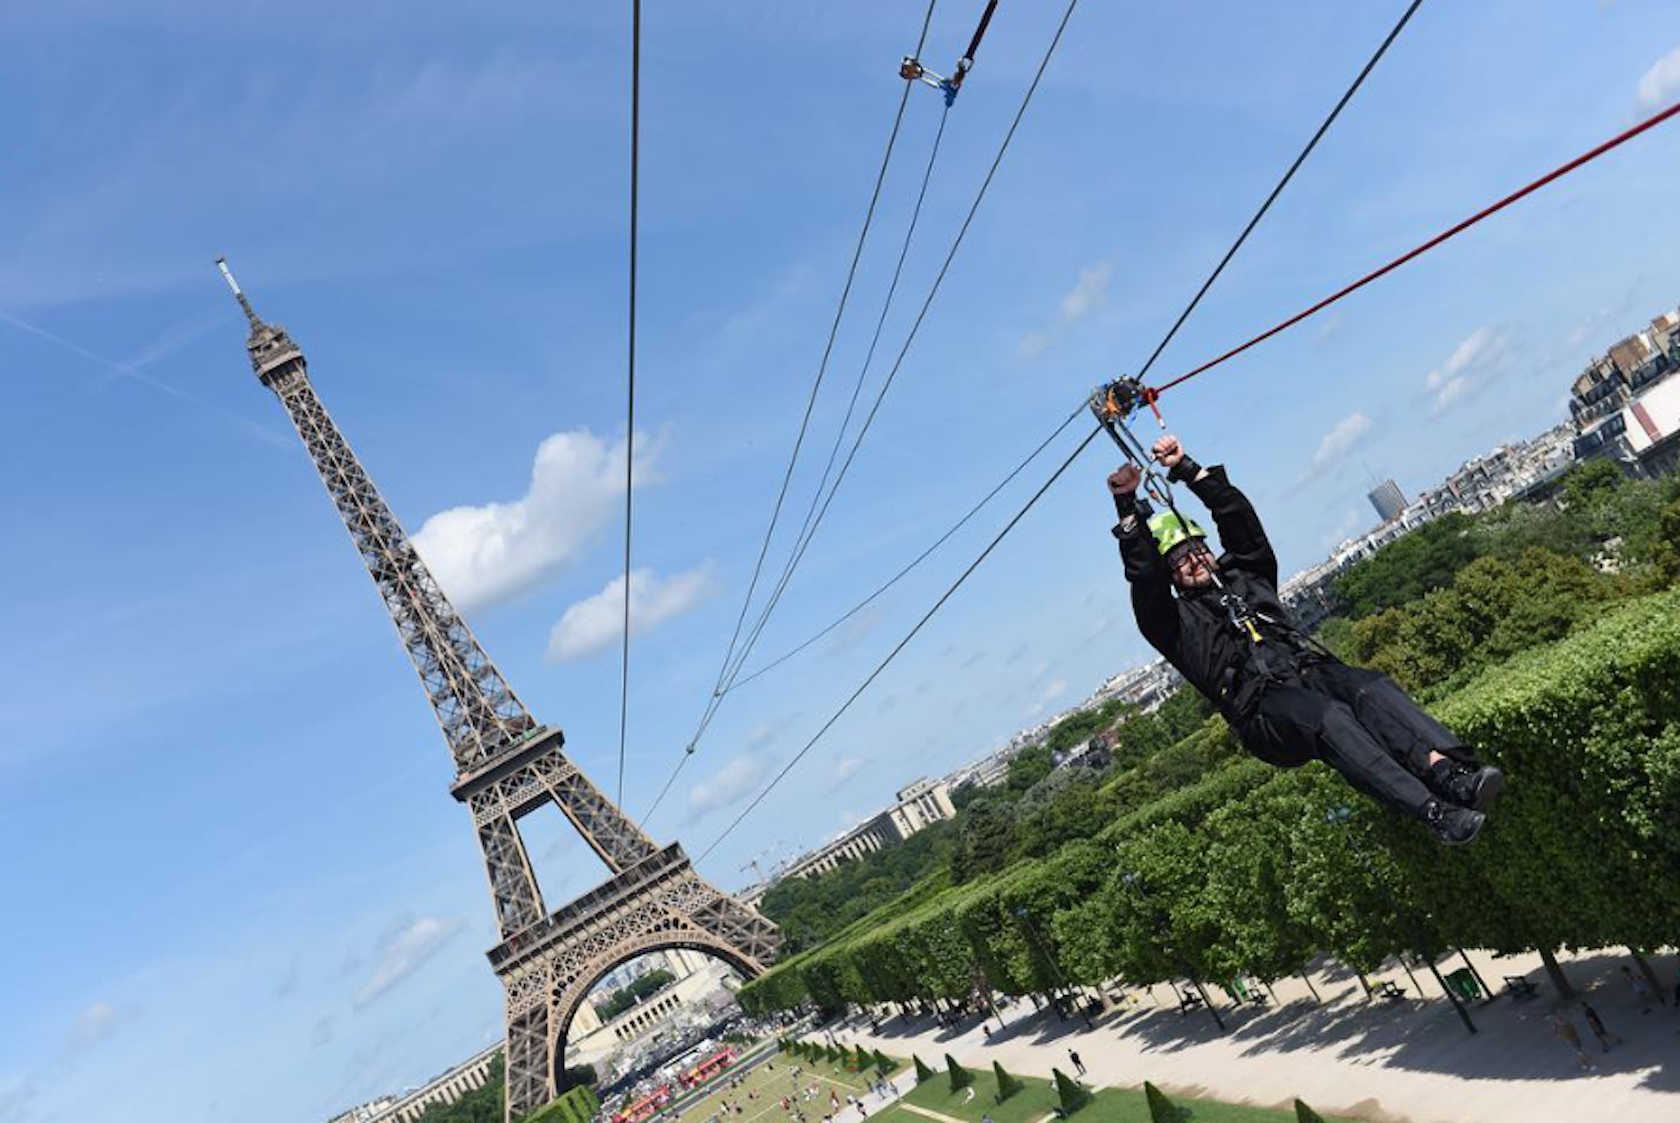 Eiffel Tower zip line